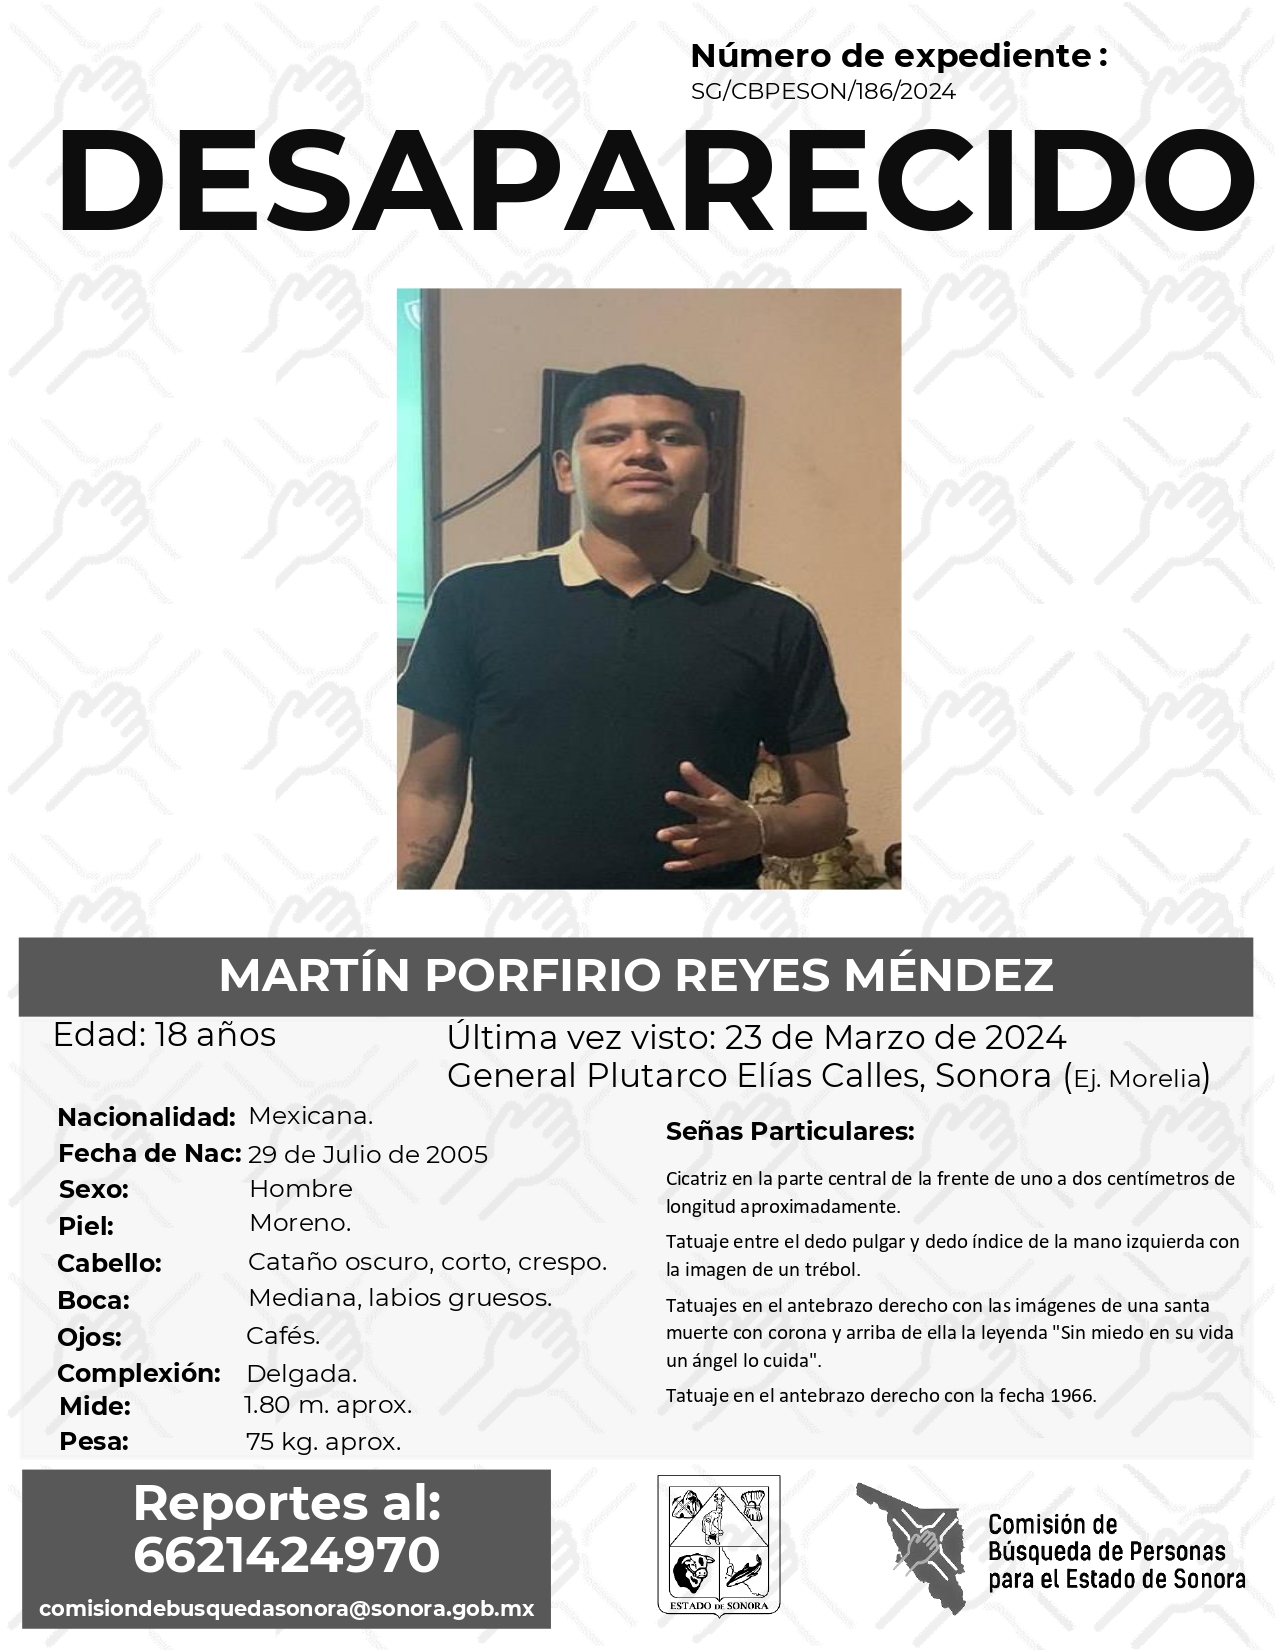 MARTÍN PORFIRIO REYES MÉNDEZ - DESAPARECIDO